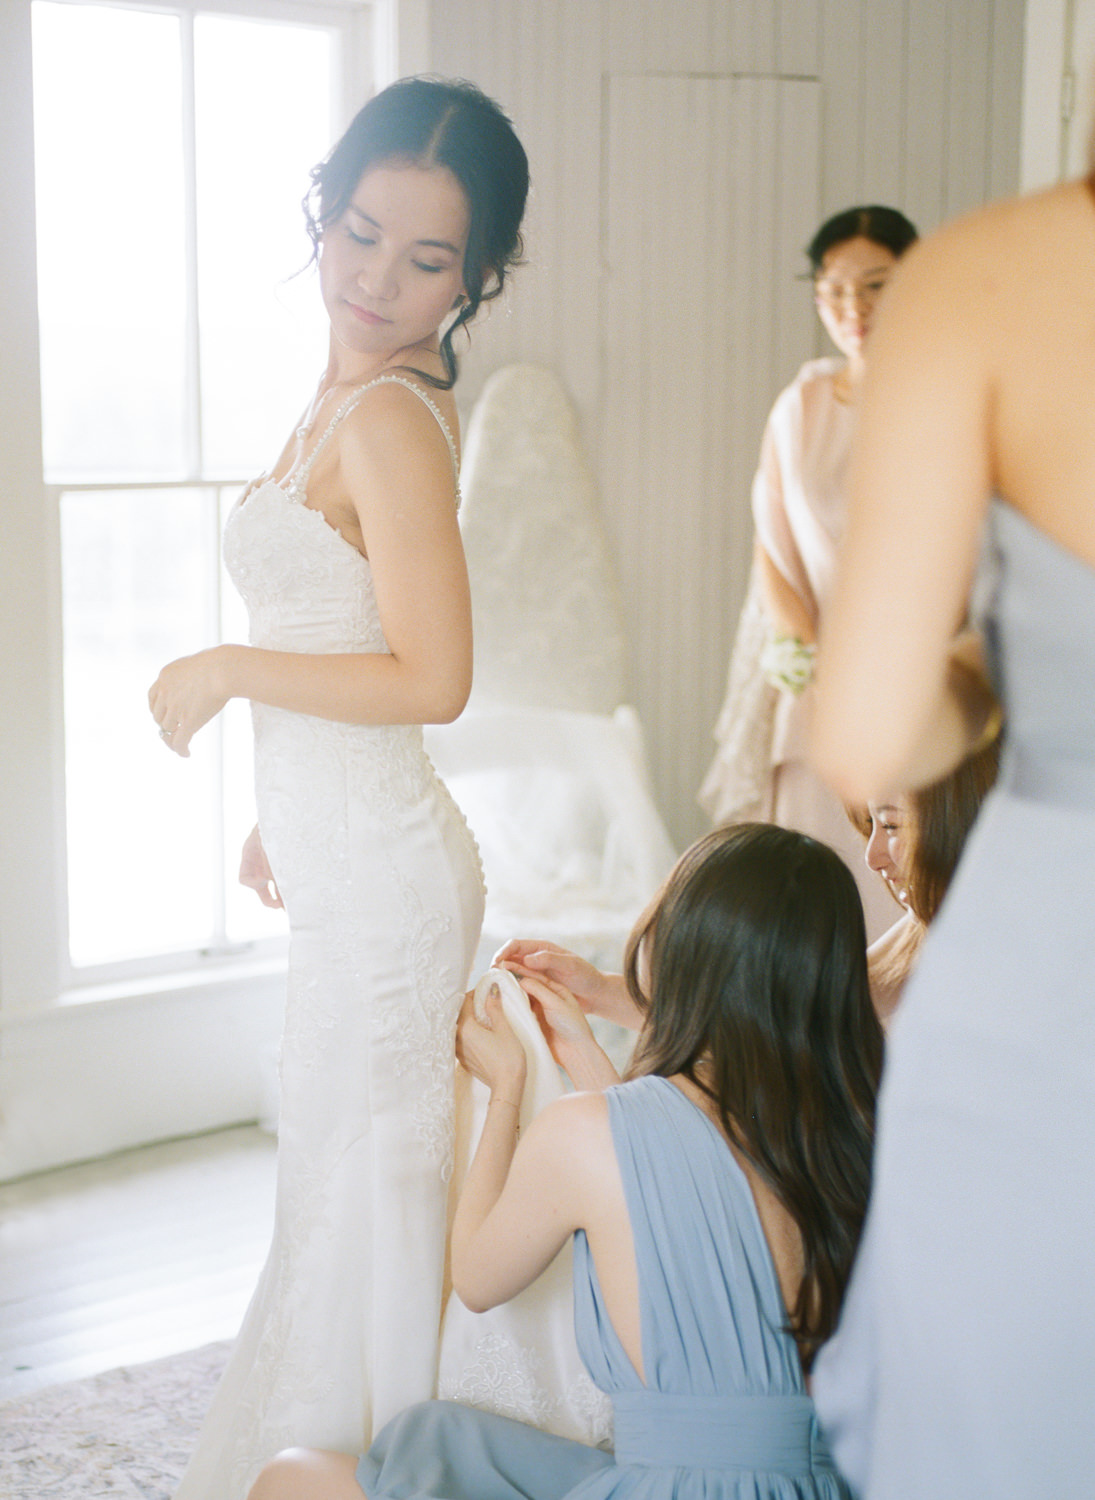 Bride getting ready at Defiance Ridge Vineyards; St. Louis fine art film wedding photographer Erica Robnett Photography